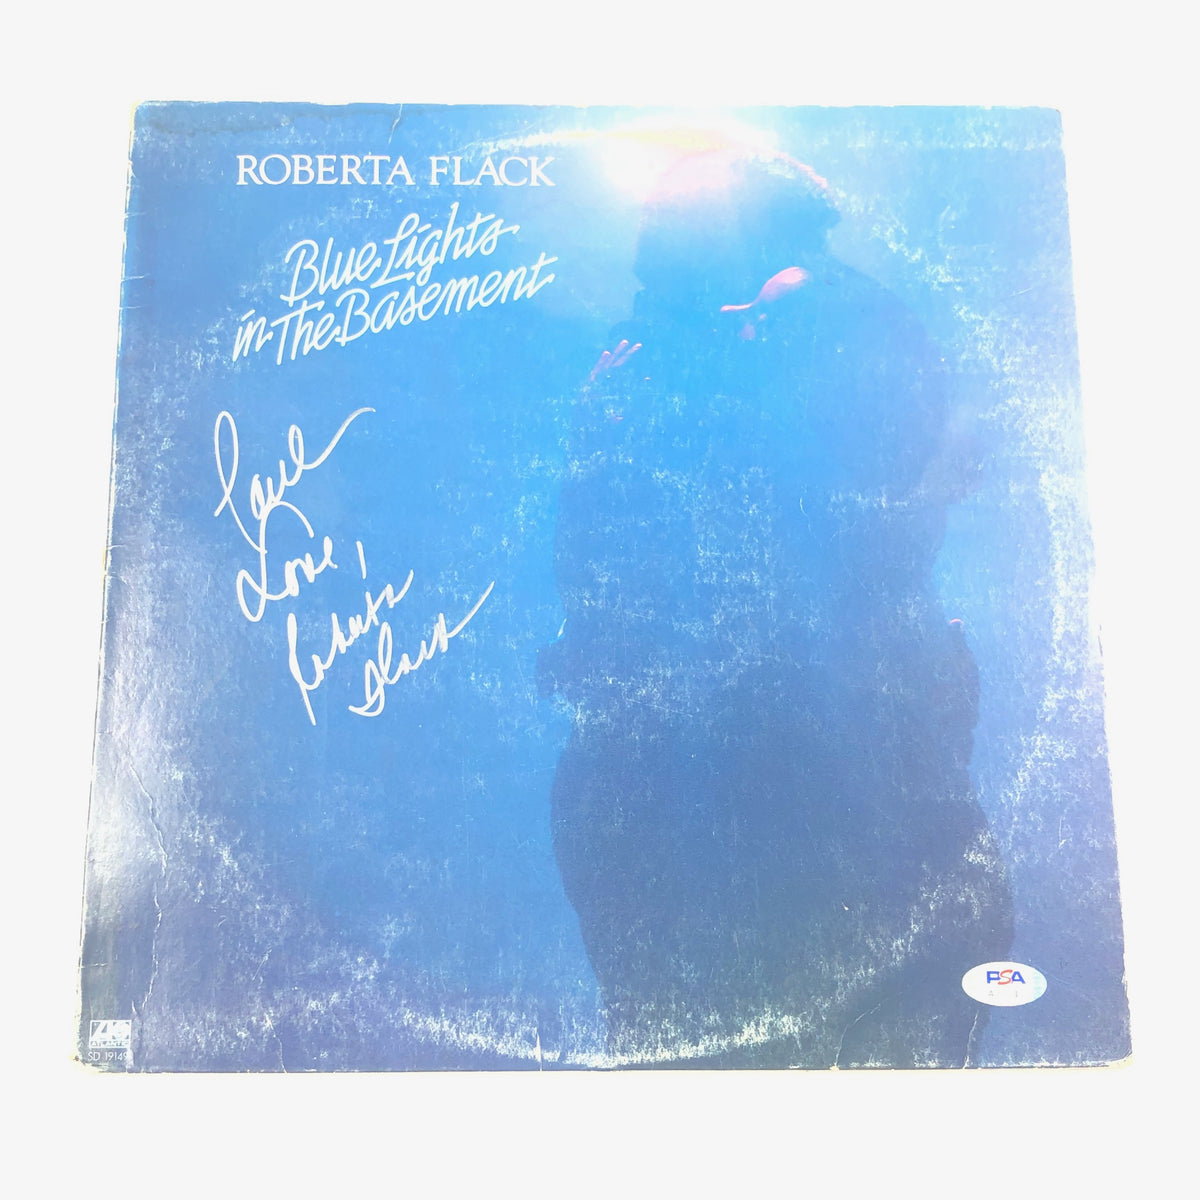 ROBERTA FLACK LP Vinyl PSA/DNA Blue Lights in the Basement Album autog –  Golden State Memorabilia